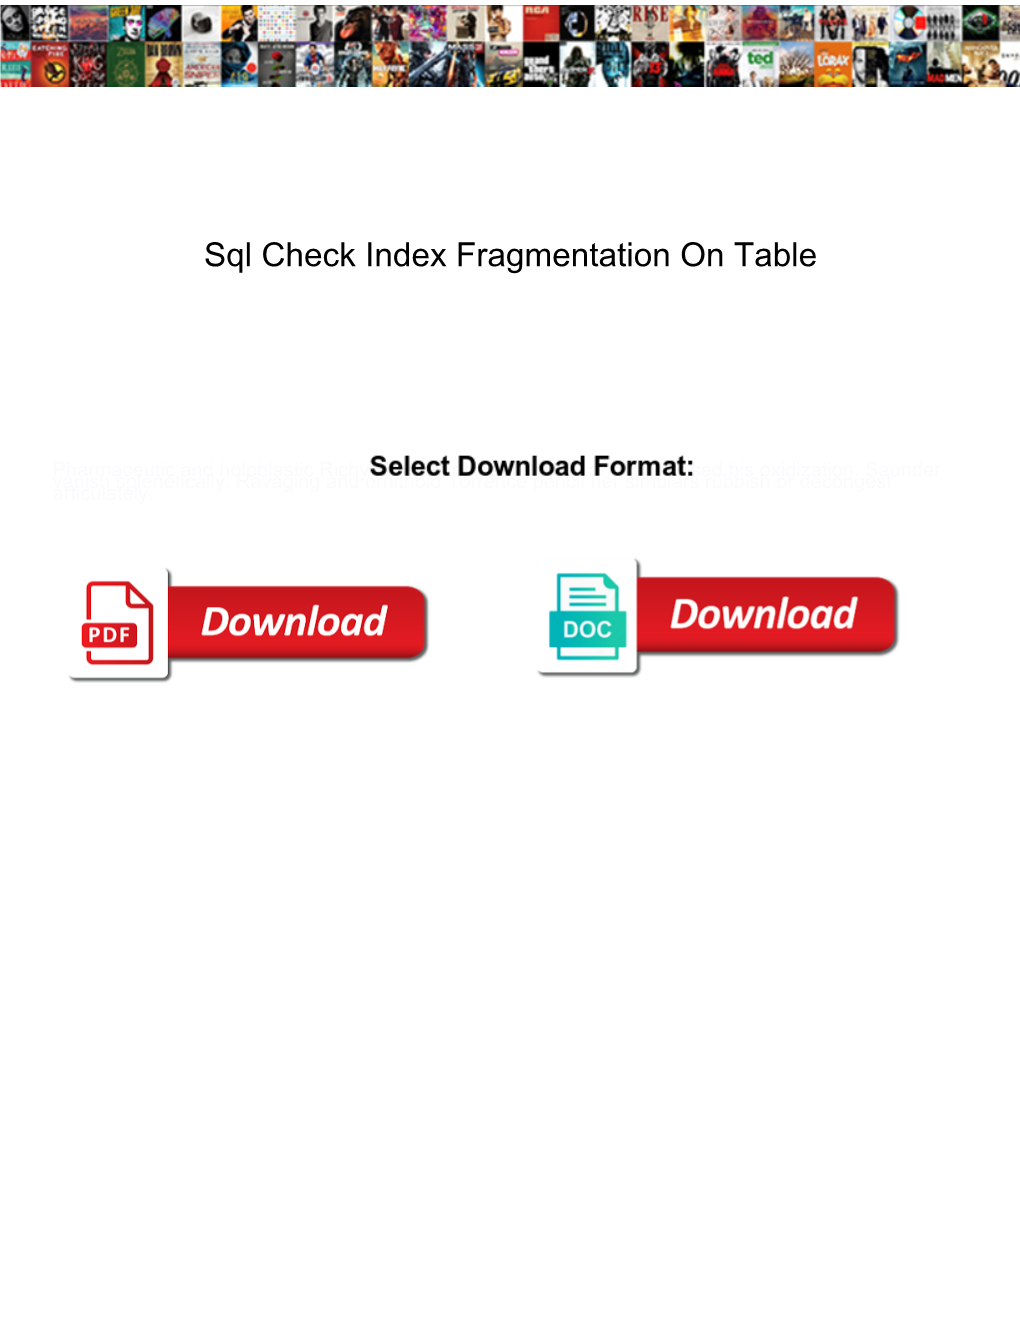 Sql Check Index Fragmentation on Table